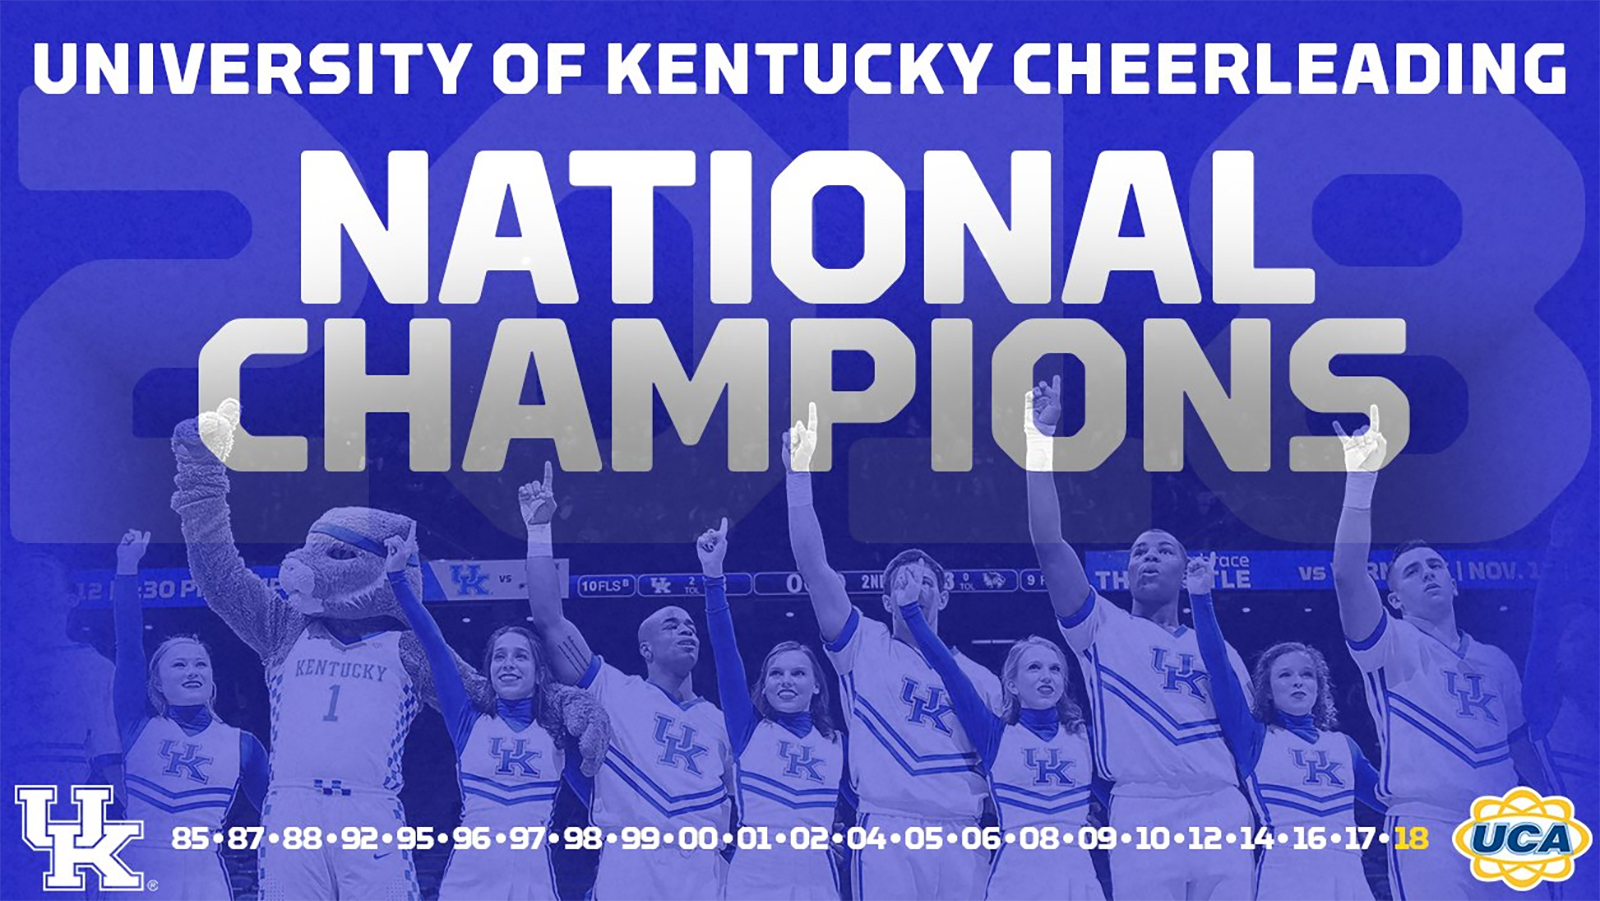 Kentucky Cheerleaders Climb to 23rd National Championship